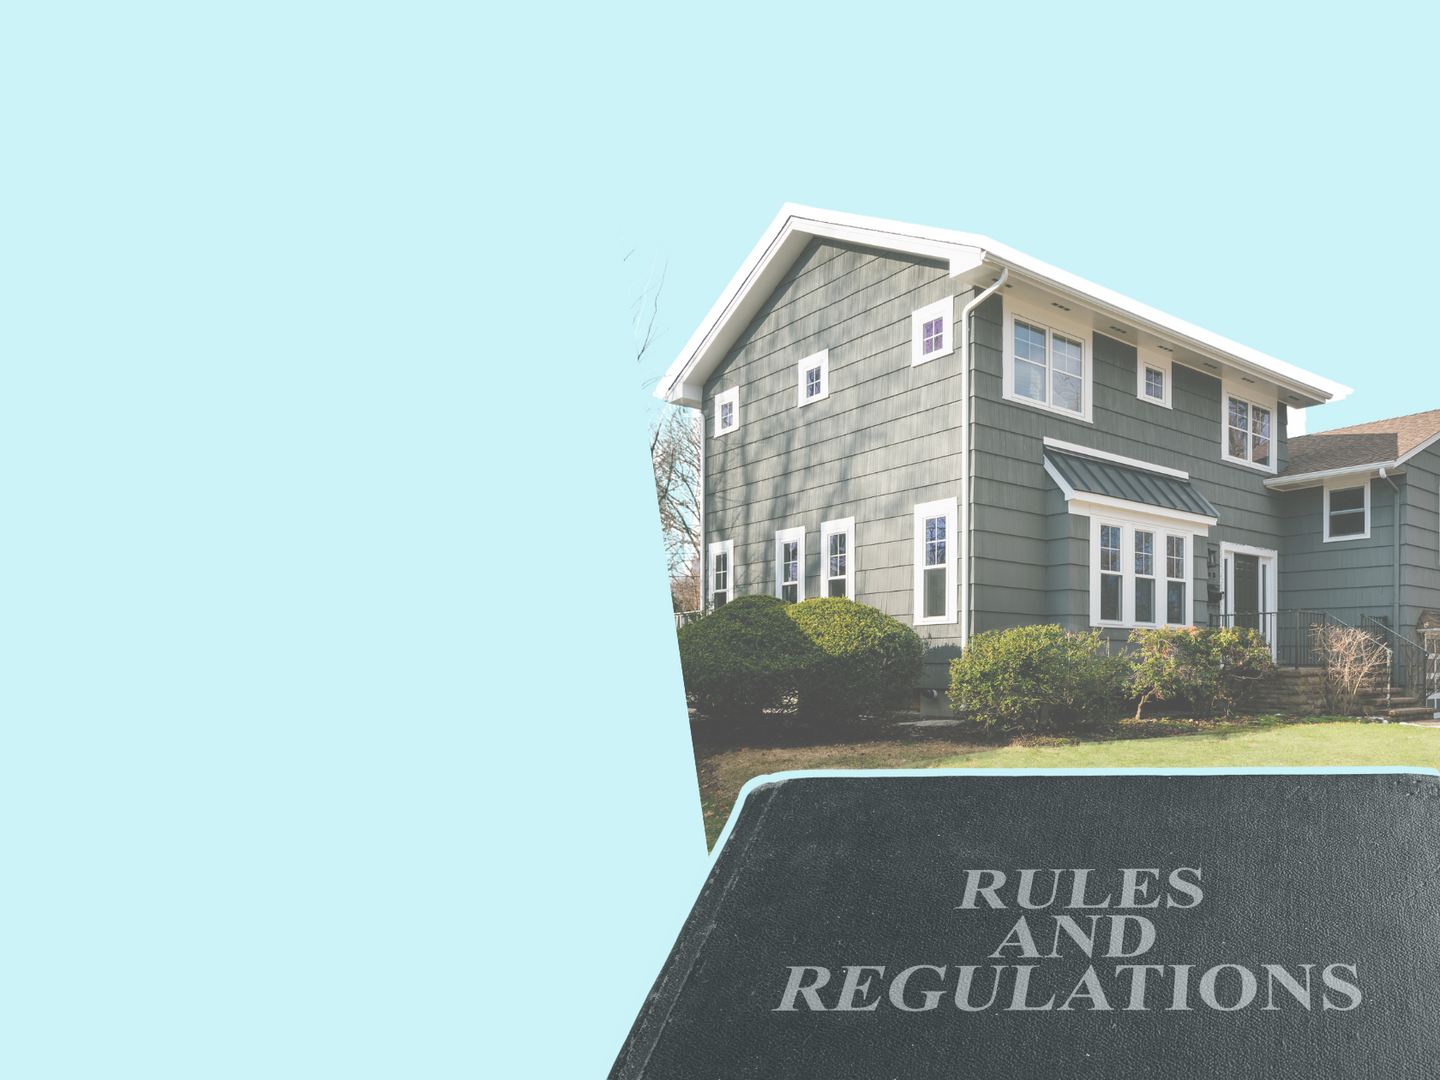 Municipal Zoning Regulations in New Jersey